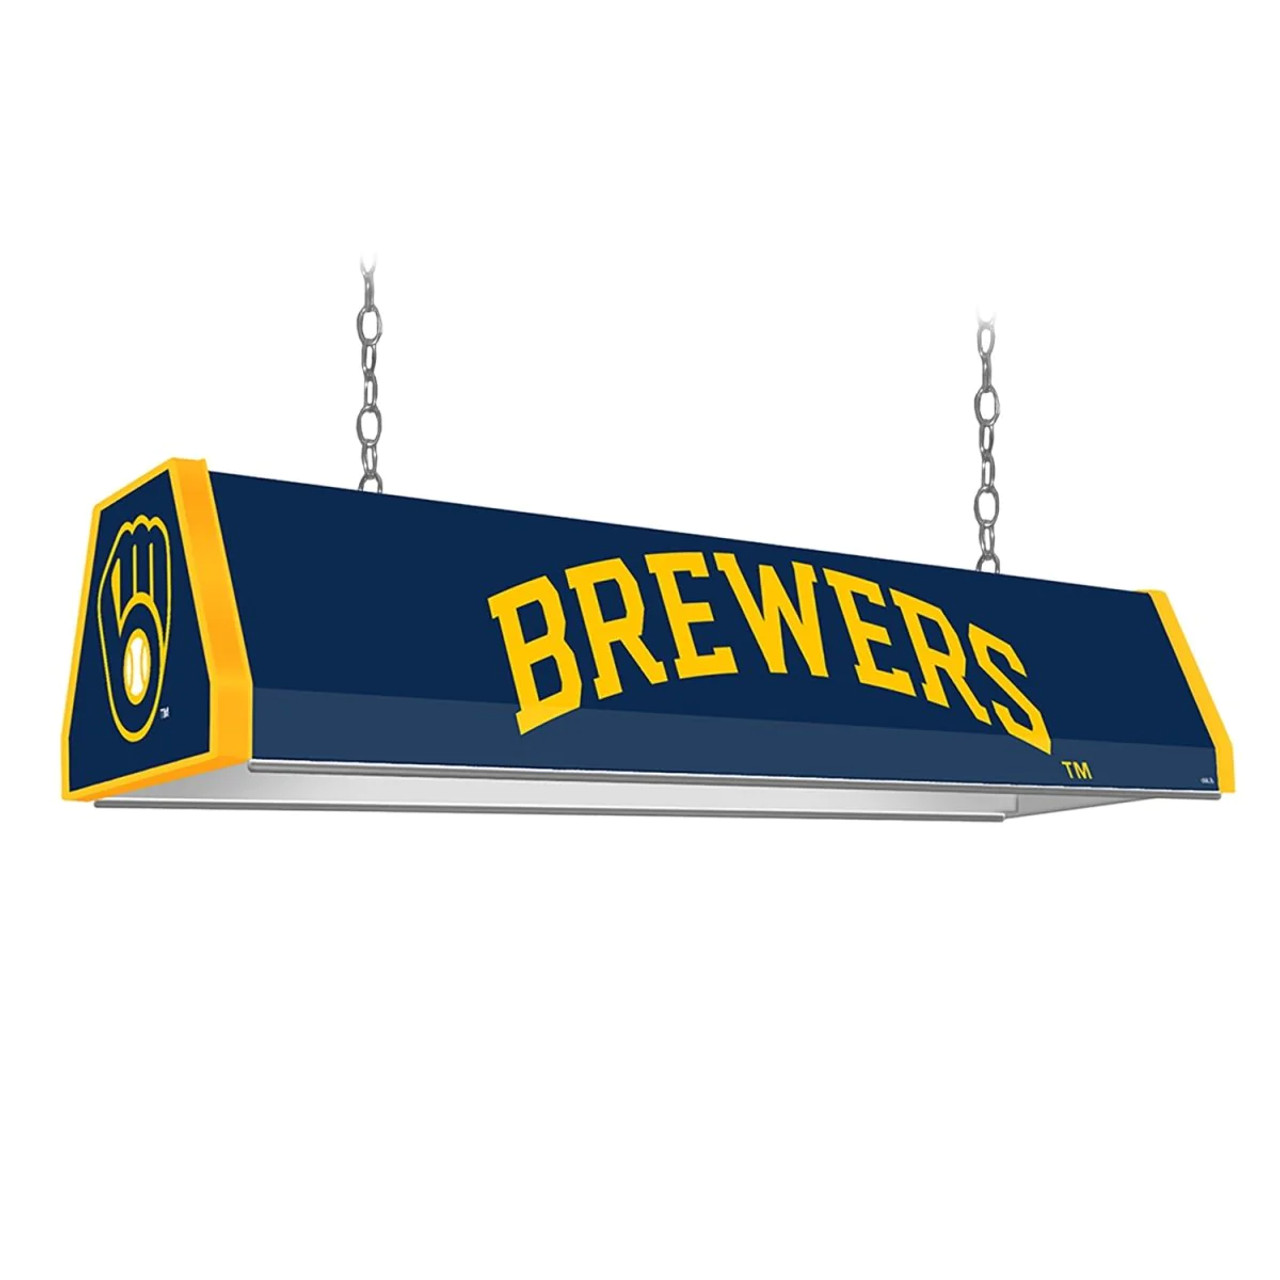 MBBREWERS-310-01A, MIL, Milwaukee, Brewers,  Standard, Billiard, Pool, Table, Light, Lamp, "A" Version, MLB, The Fan-Brand, 704384966029